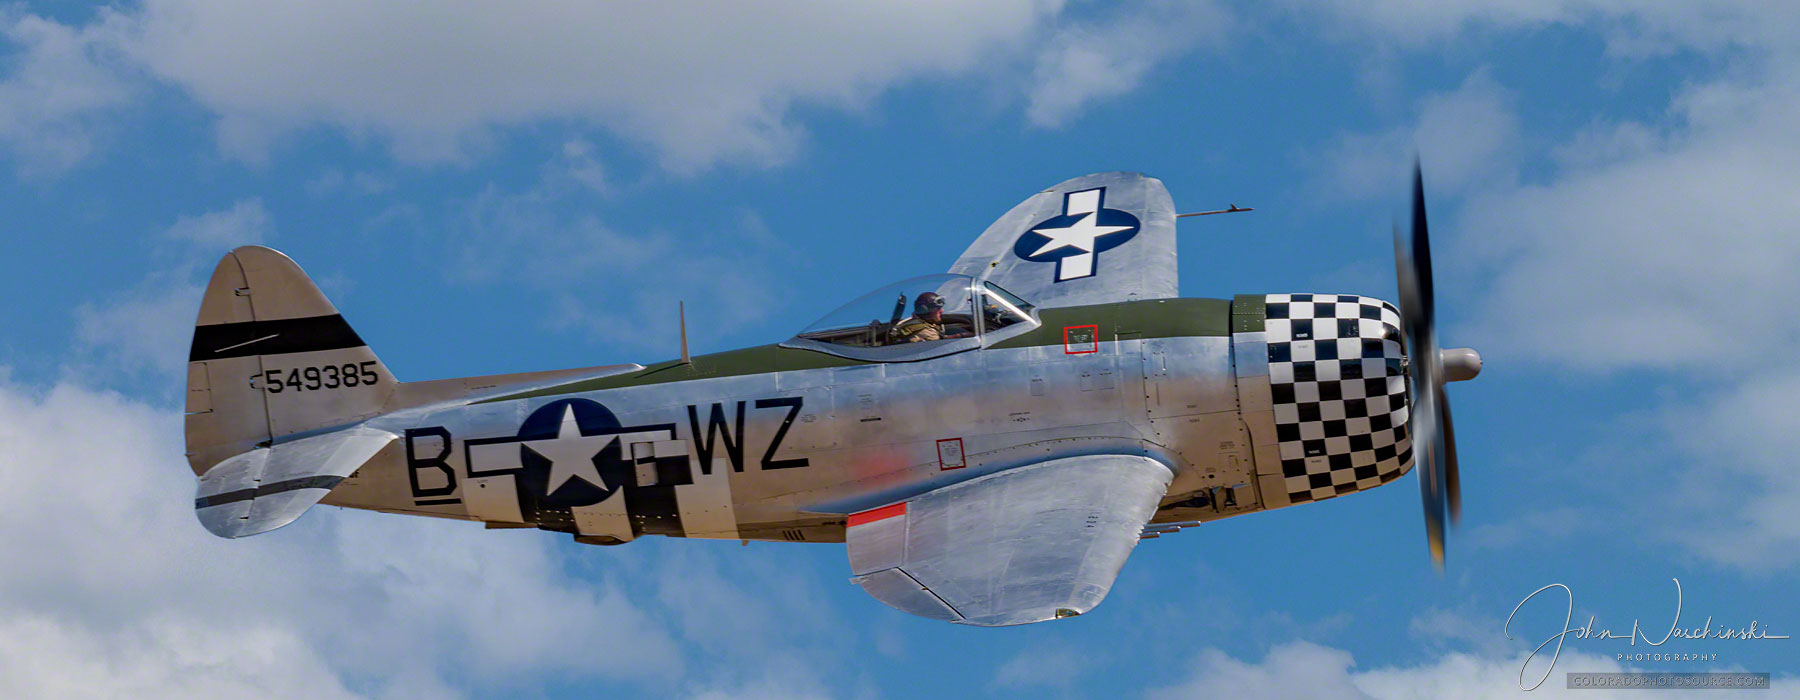 Photos of The Republic P-47 Thunderbolt Juggernaut WWII Warbird